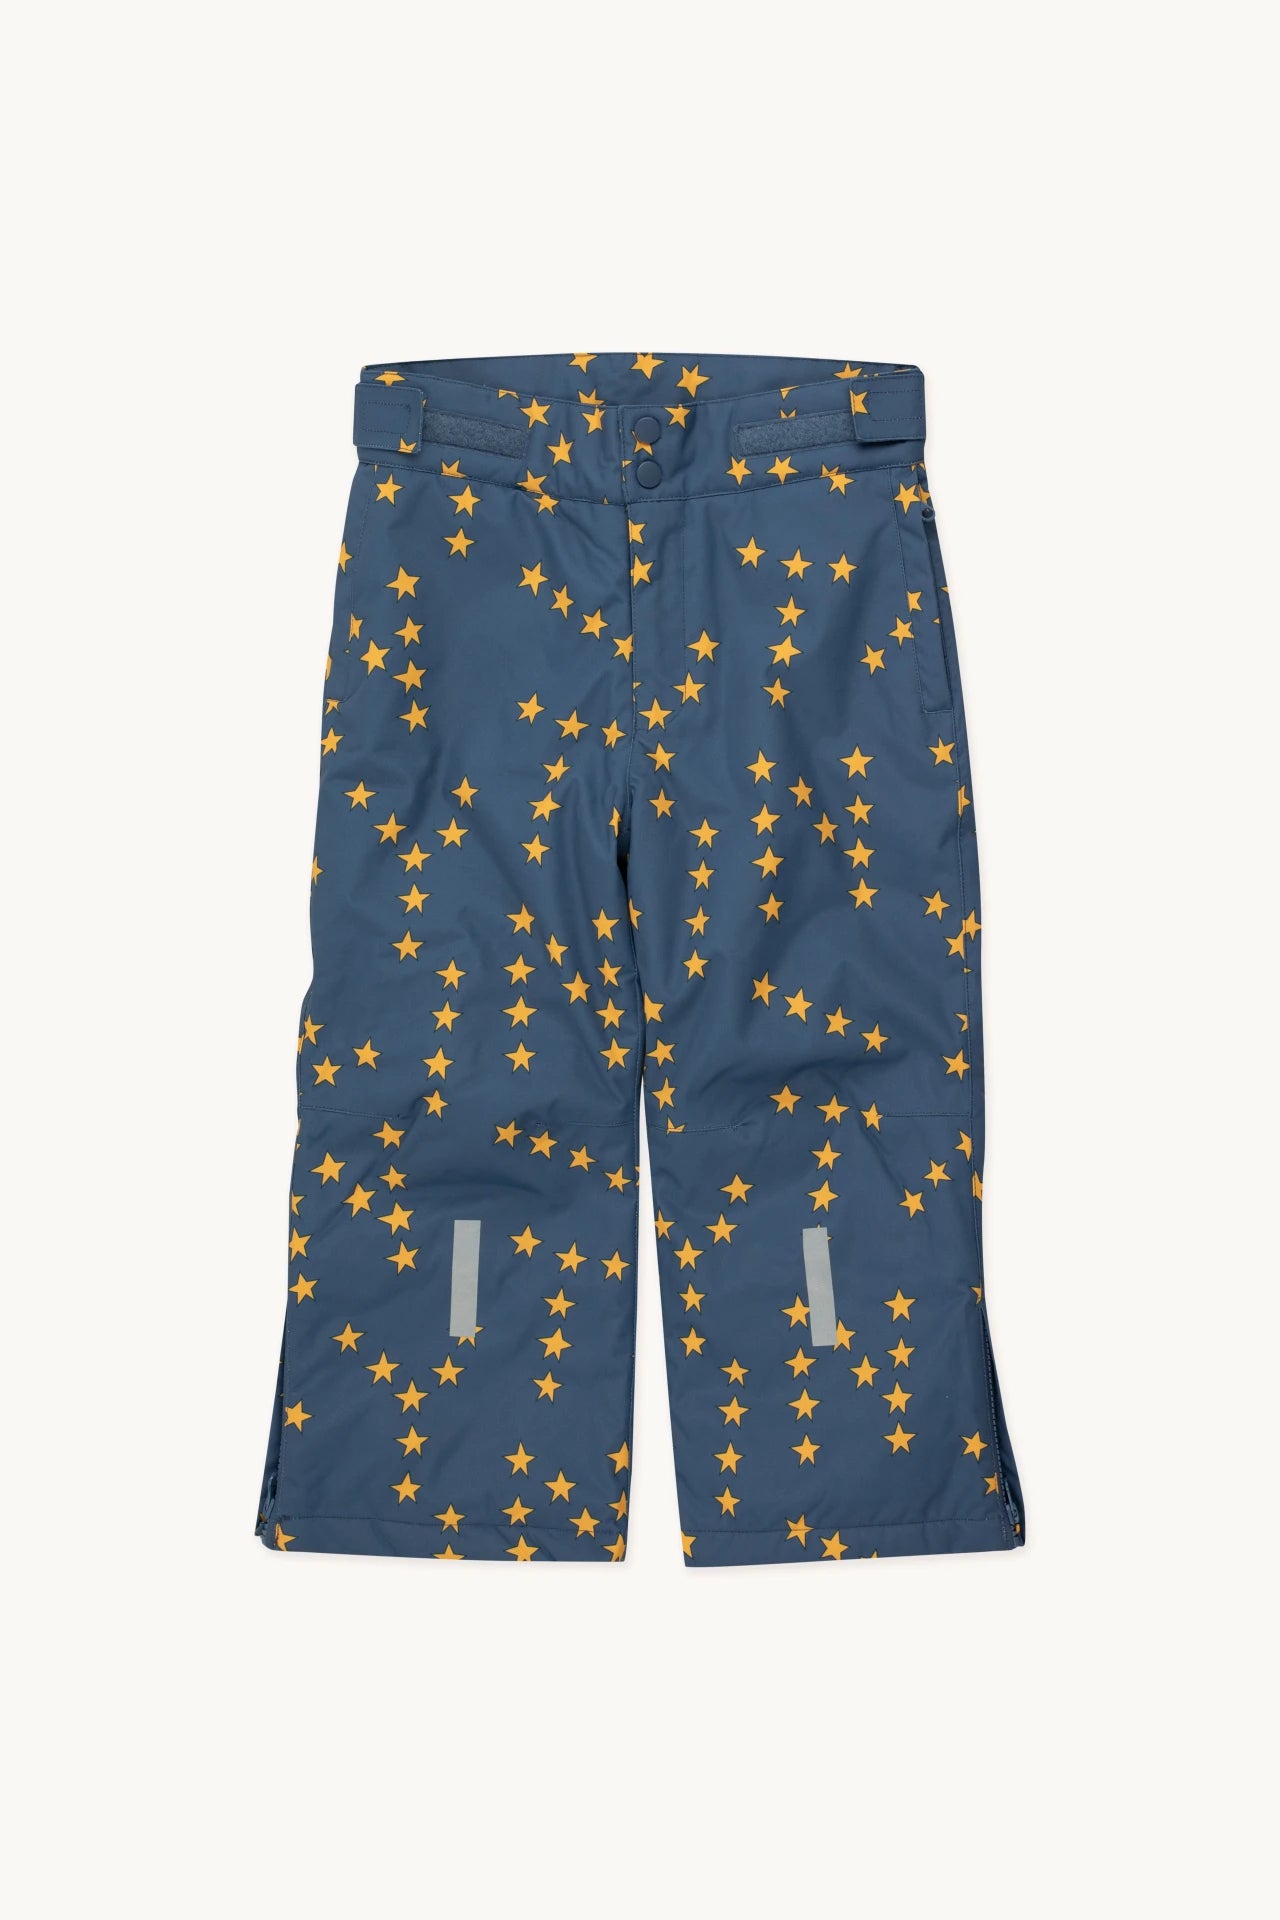 Tiny Cottons Tiny Stars Trousers - light navy